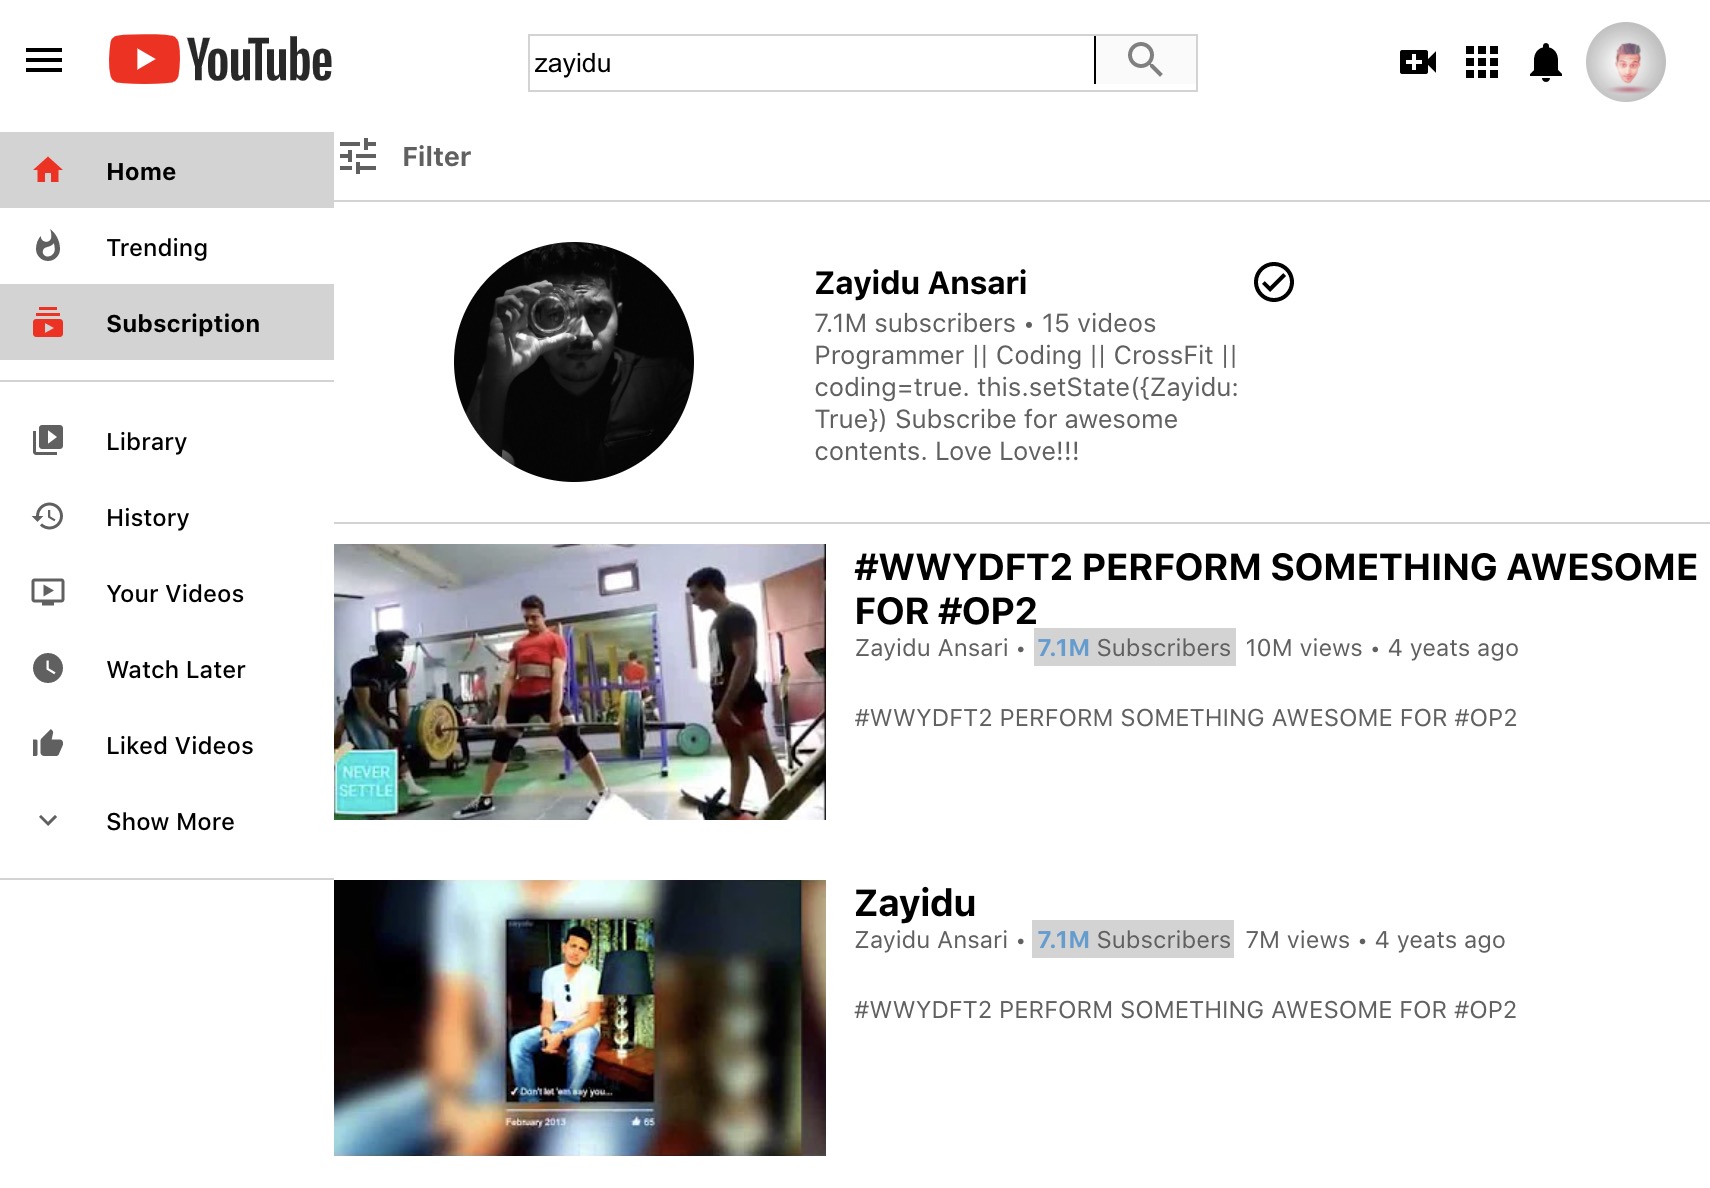 YouTube Clone
                                                                                      - Developed by Zayidu